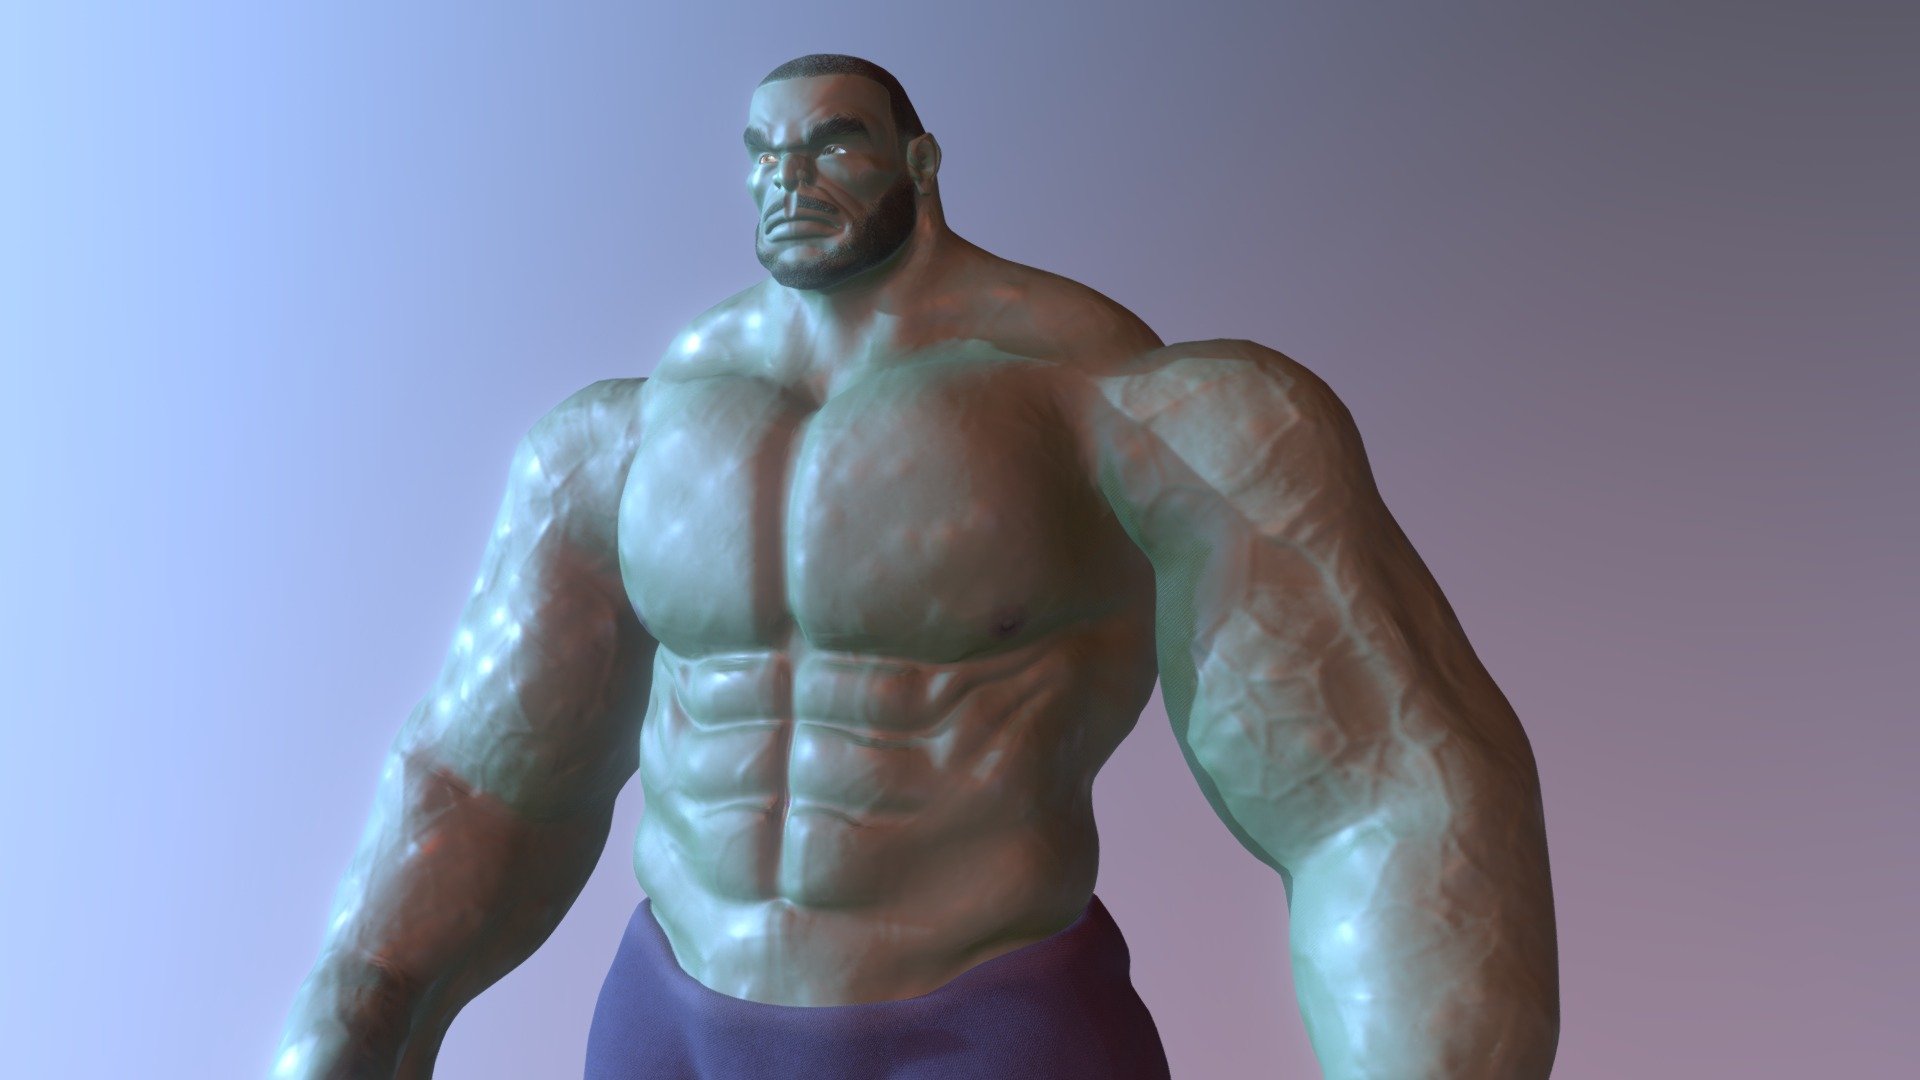 3D model of &ldquo;Hulk